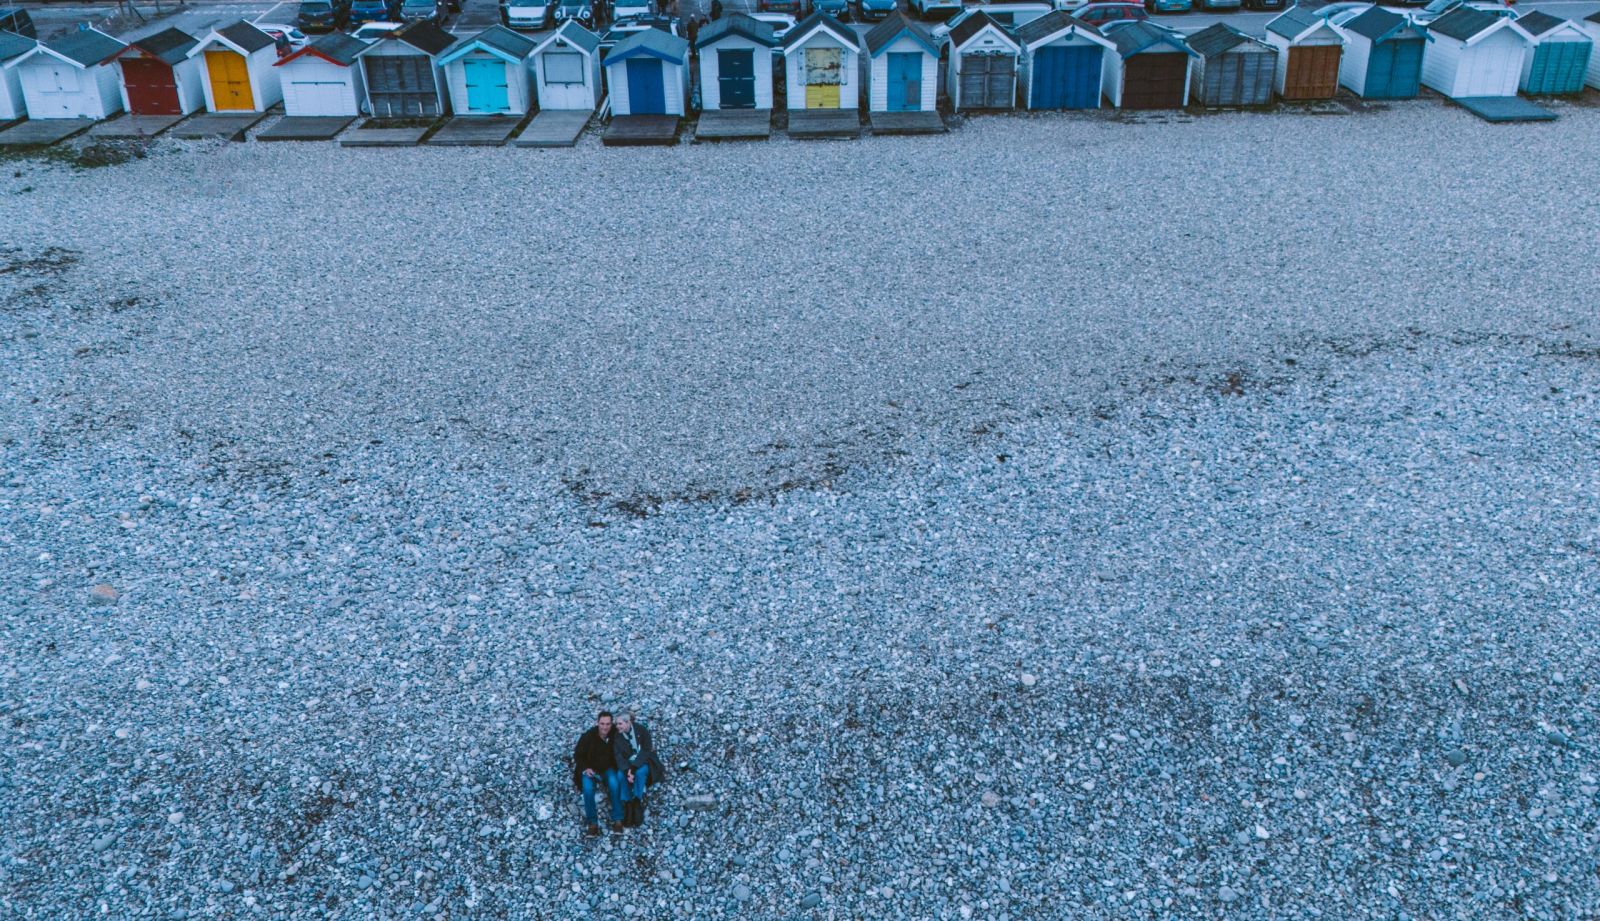 Lyme Regis #dorset #dorsetlife #visitdorset #dorsetcoast #ukcoast #dronephotography #dronelife #topdown #harbour #boats #visitengland #lensbible #lightroom #dji #polarpro #abstract #photosofbritain #capturingbritain